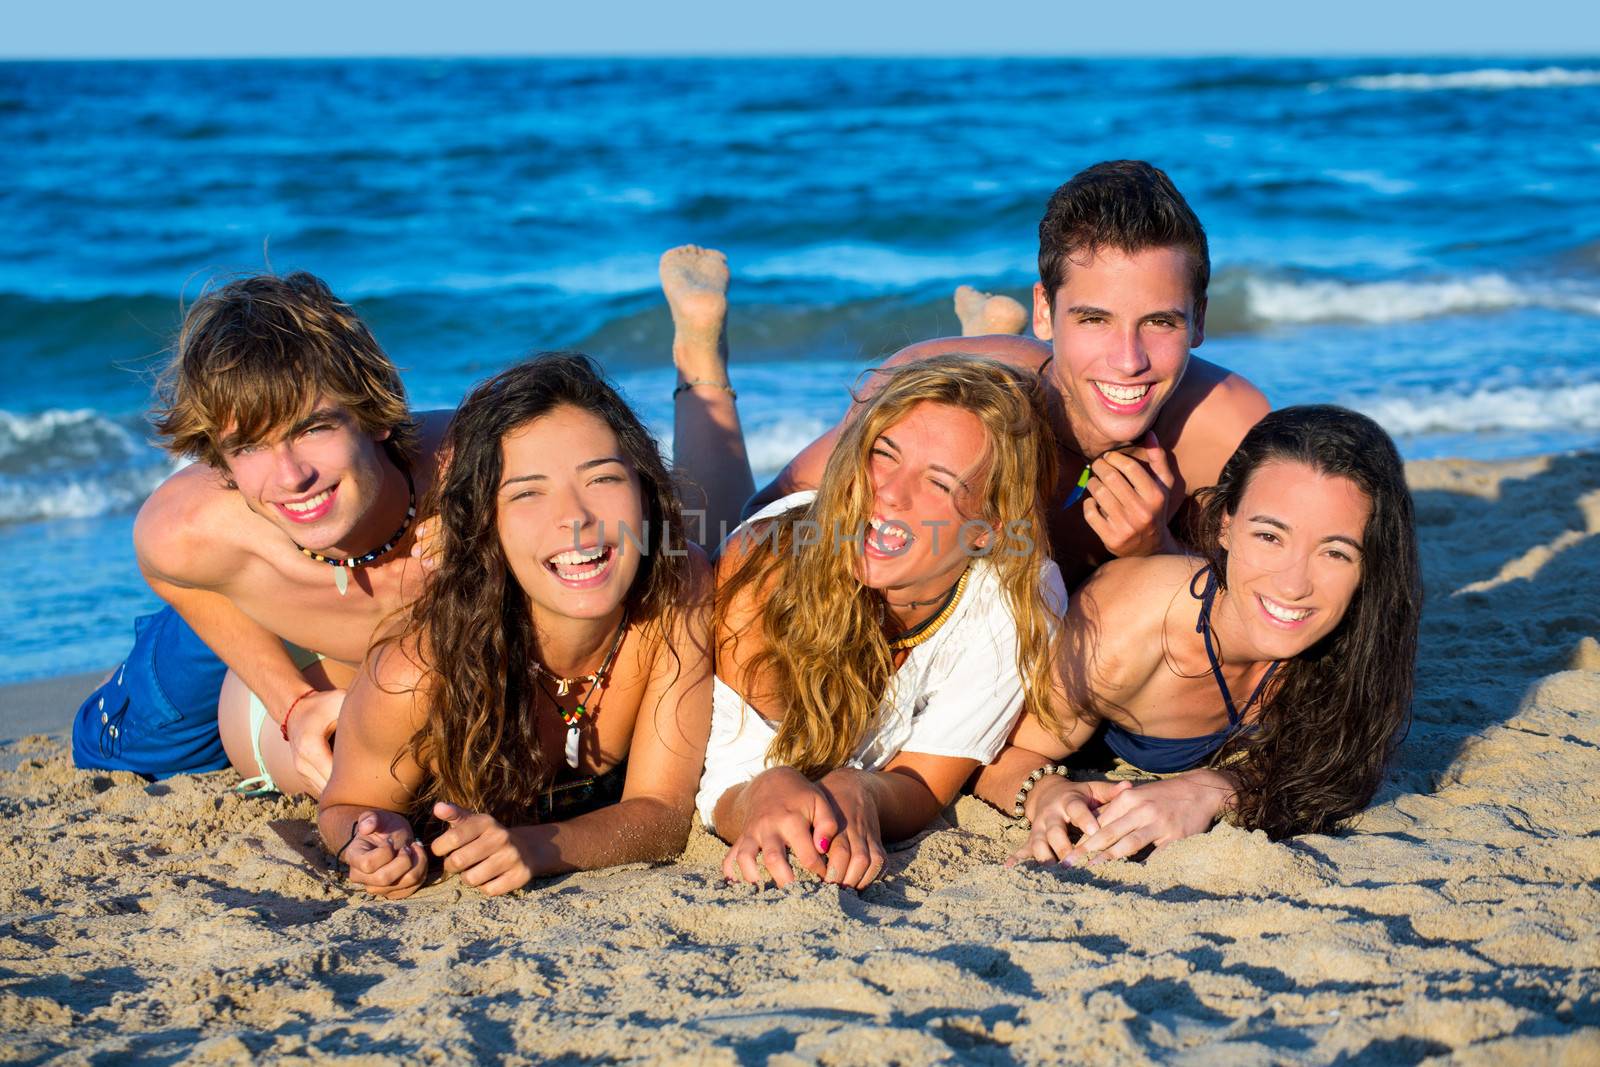 Boys and girls teen group having fun happy on the blue beach sand